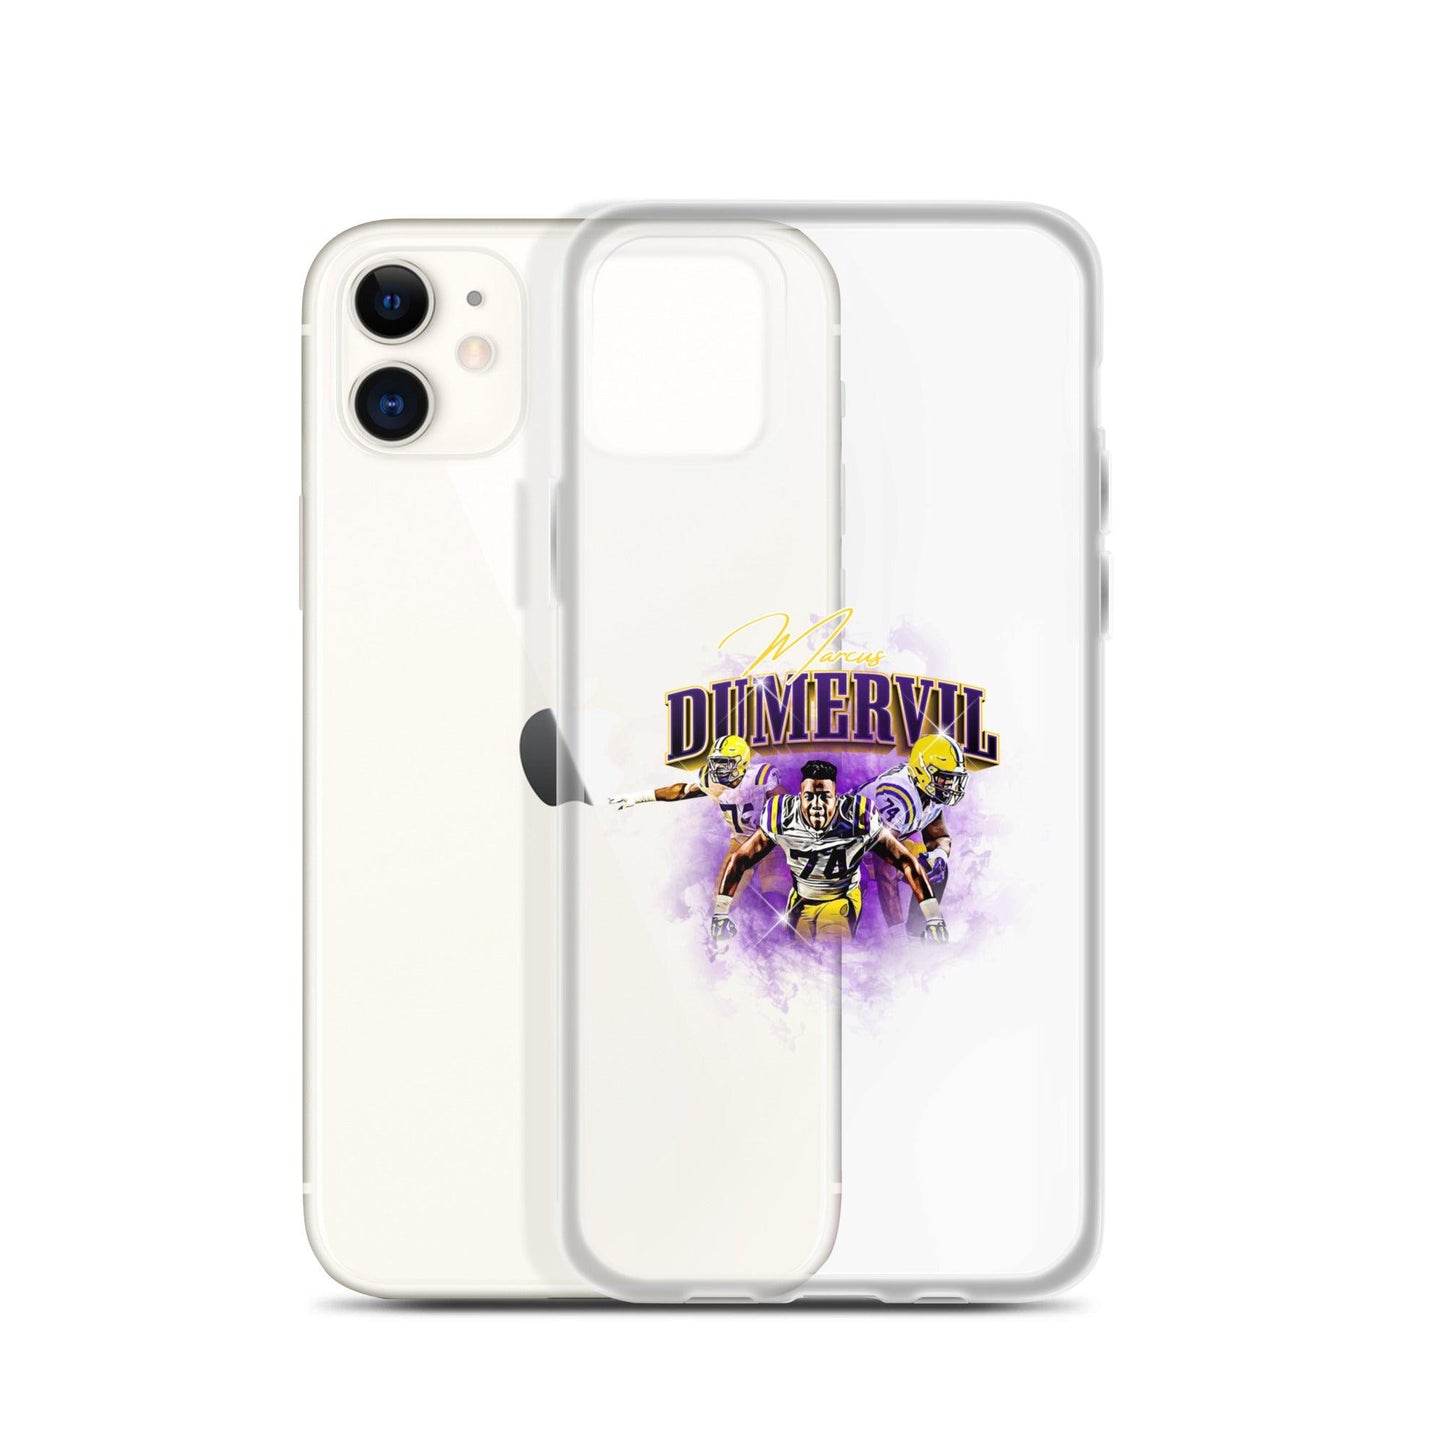 Marcus Dumervil "Legacy" iPhone Case - Fan Arch